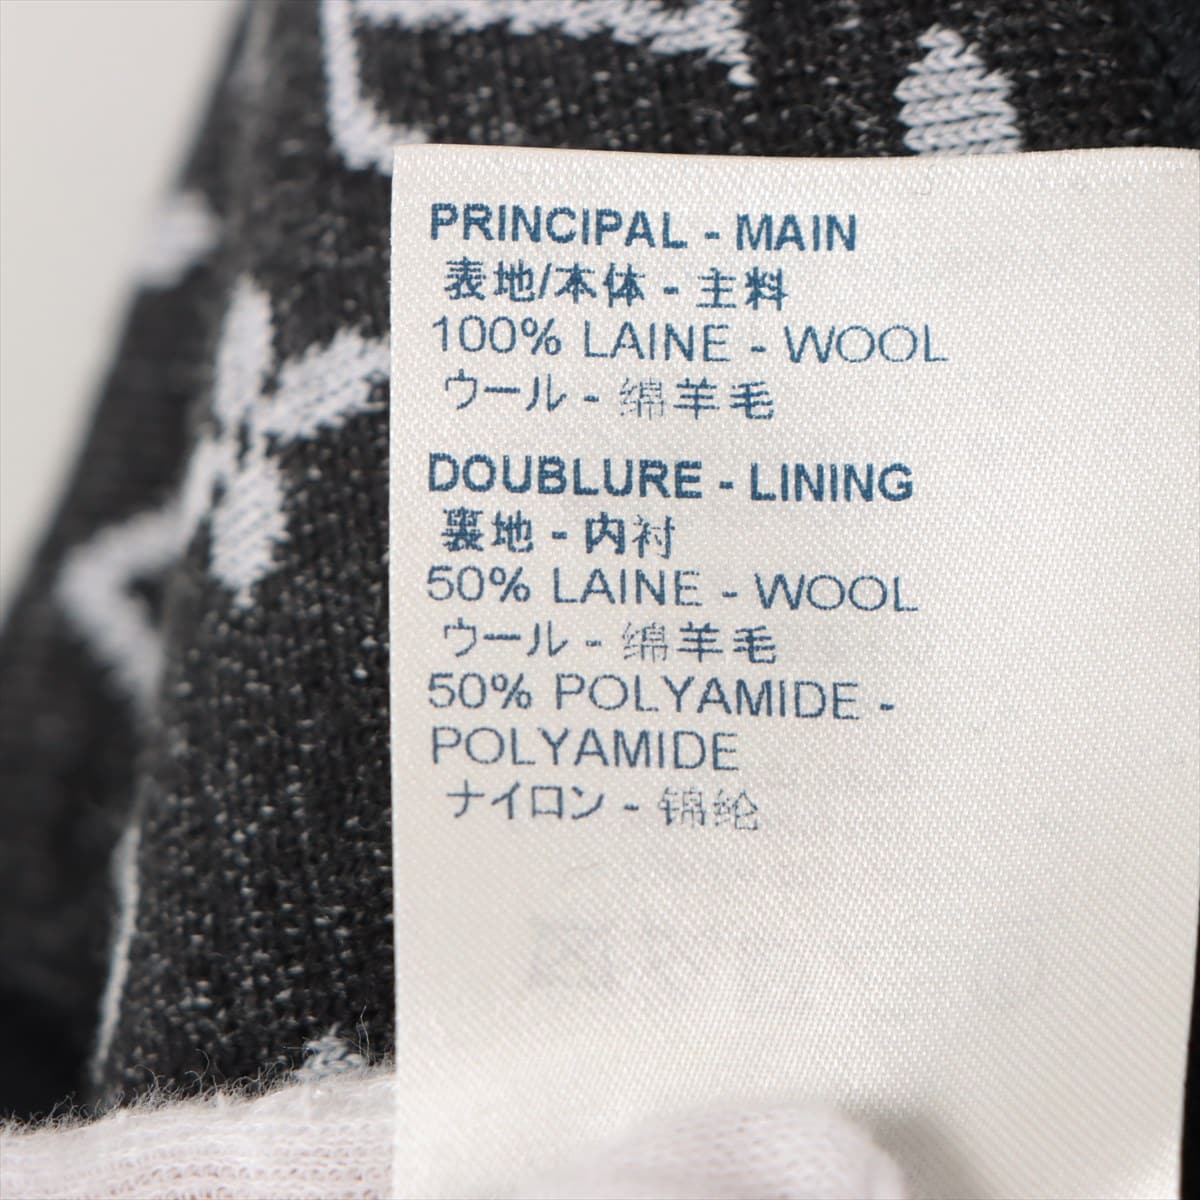 Louis Vuitton RM211M Wool Sweatpants S Men's Black  Monogram Reversible